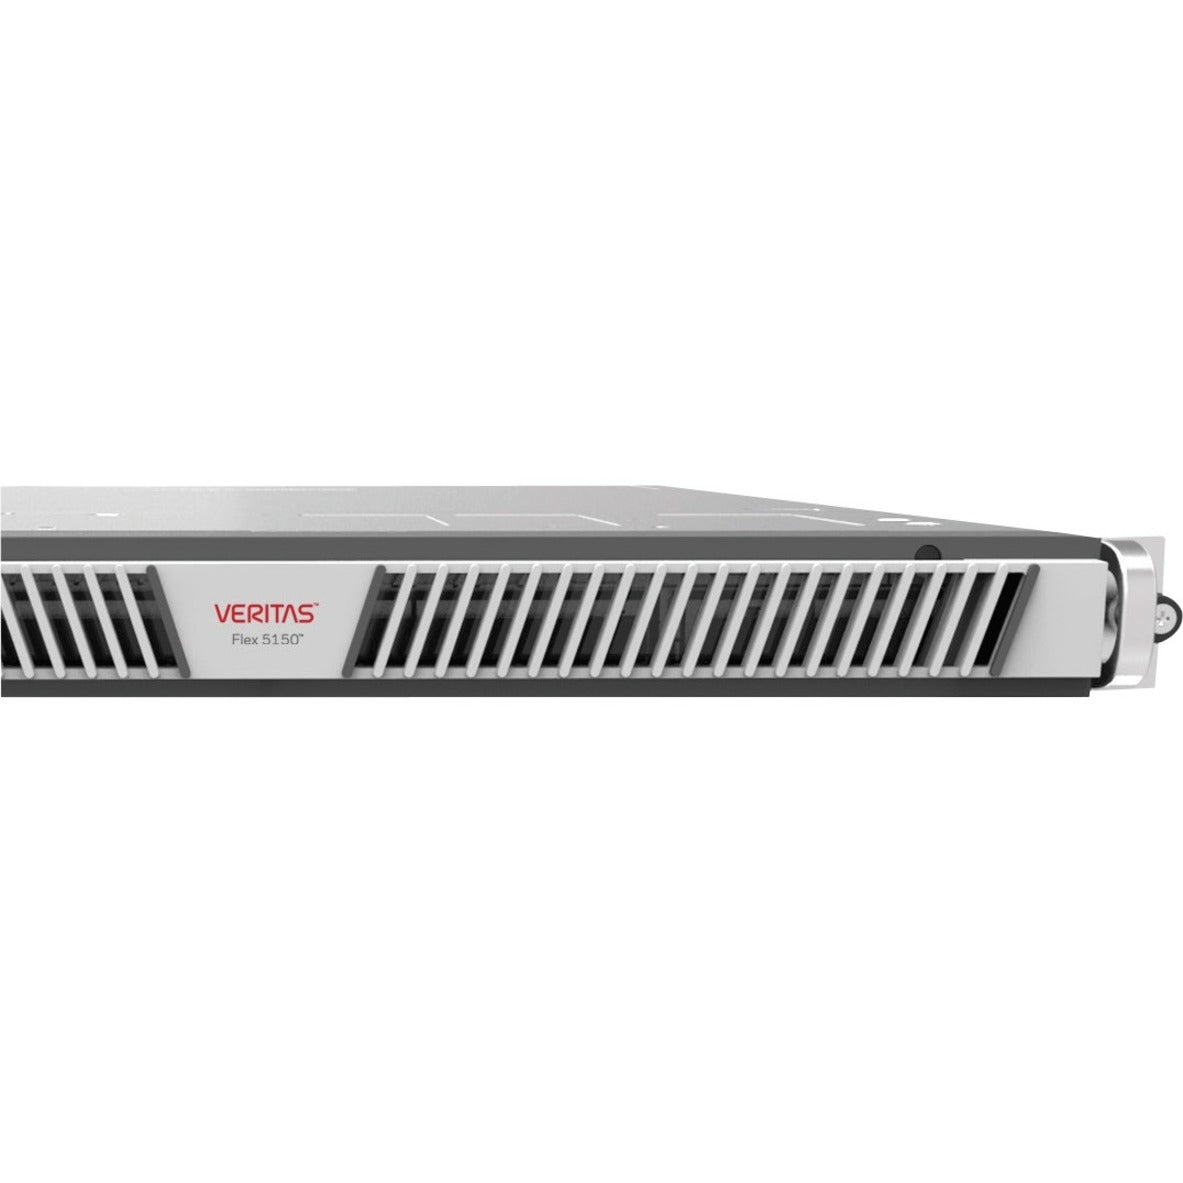 Veritas 26112-M4217 Flex System 5150 NAS Storage System, 15TB Total Hard Drive Capacity Installed, 12Gb/s SAS Controller, 6 Network (RJ-45) Ports